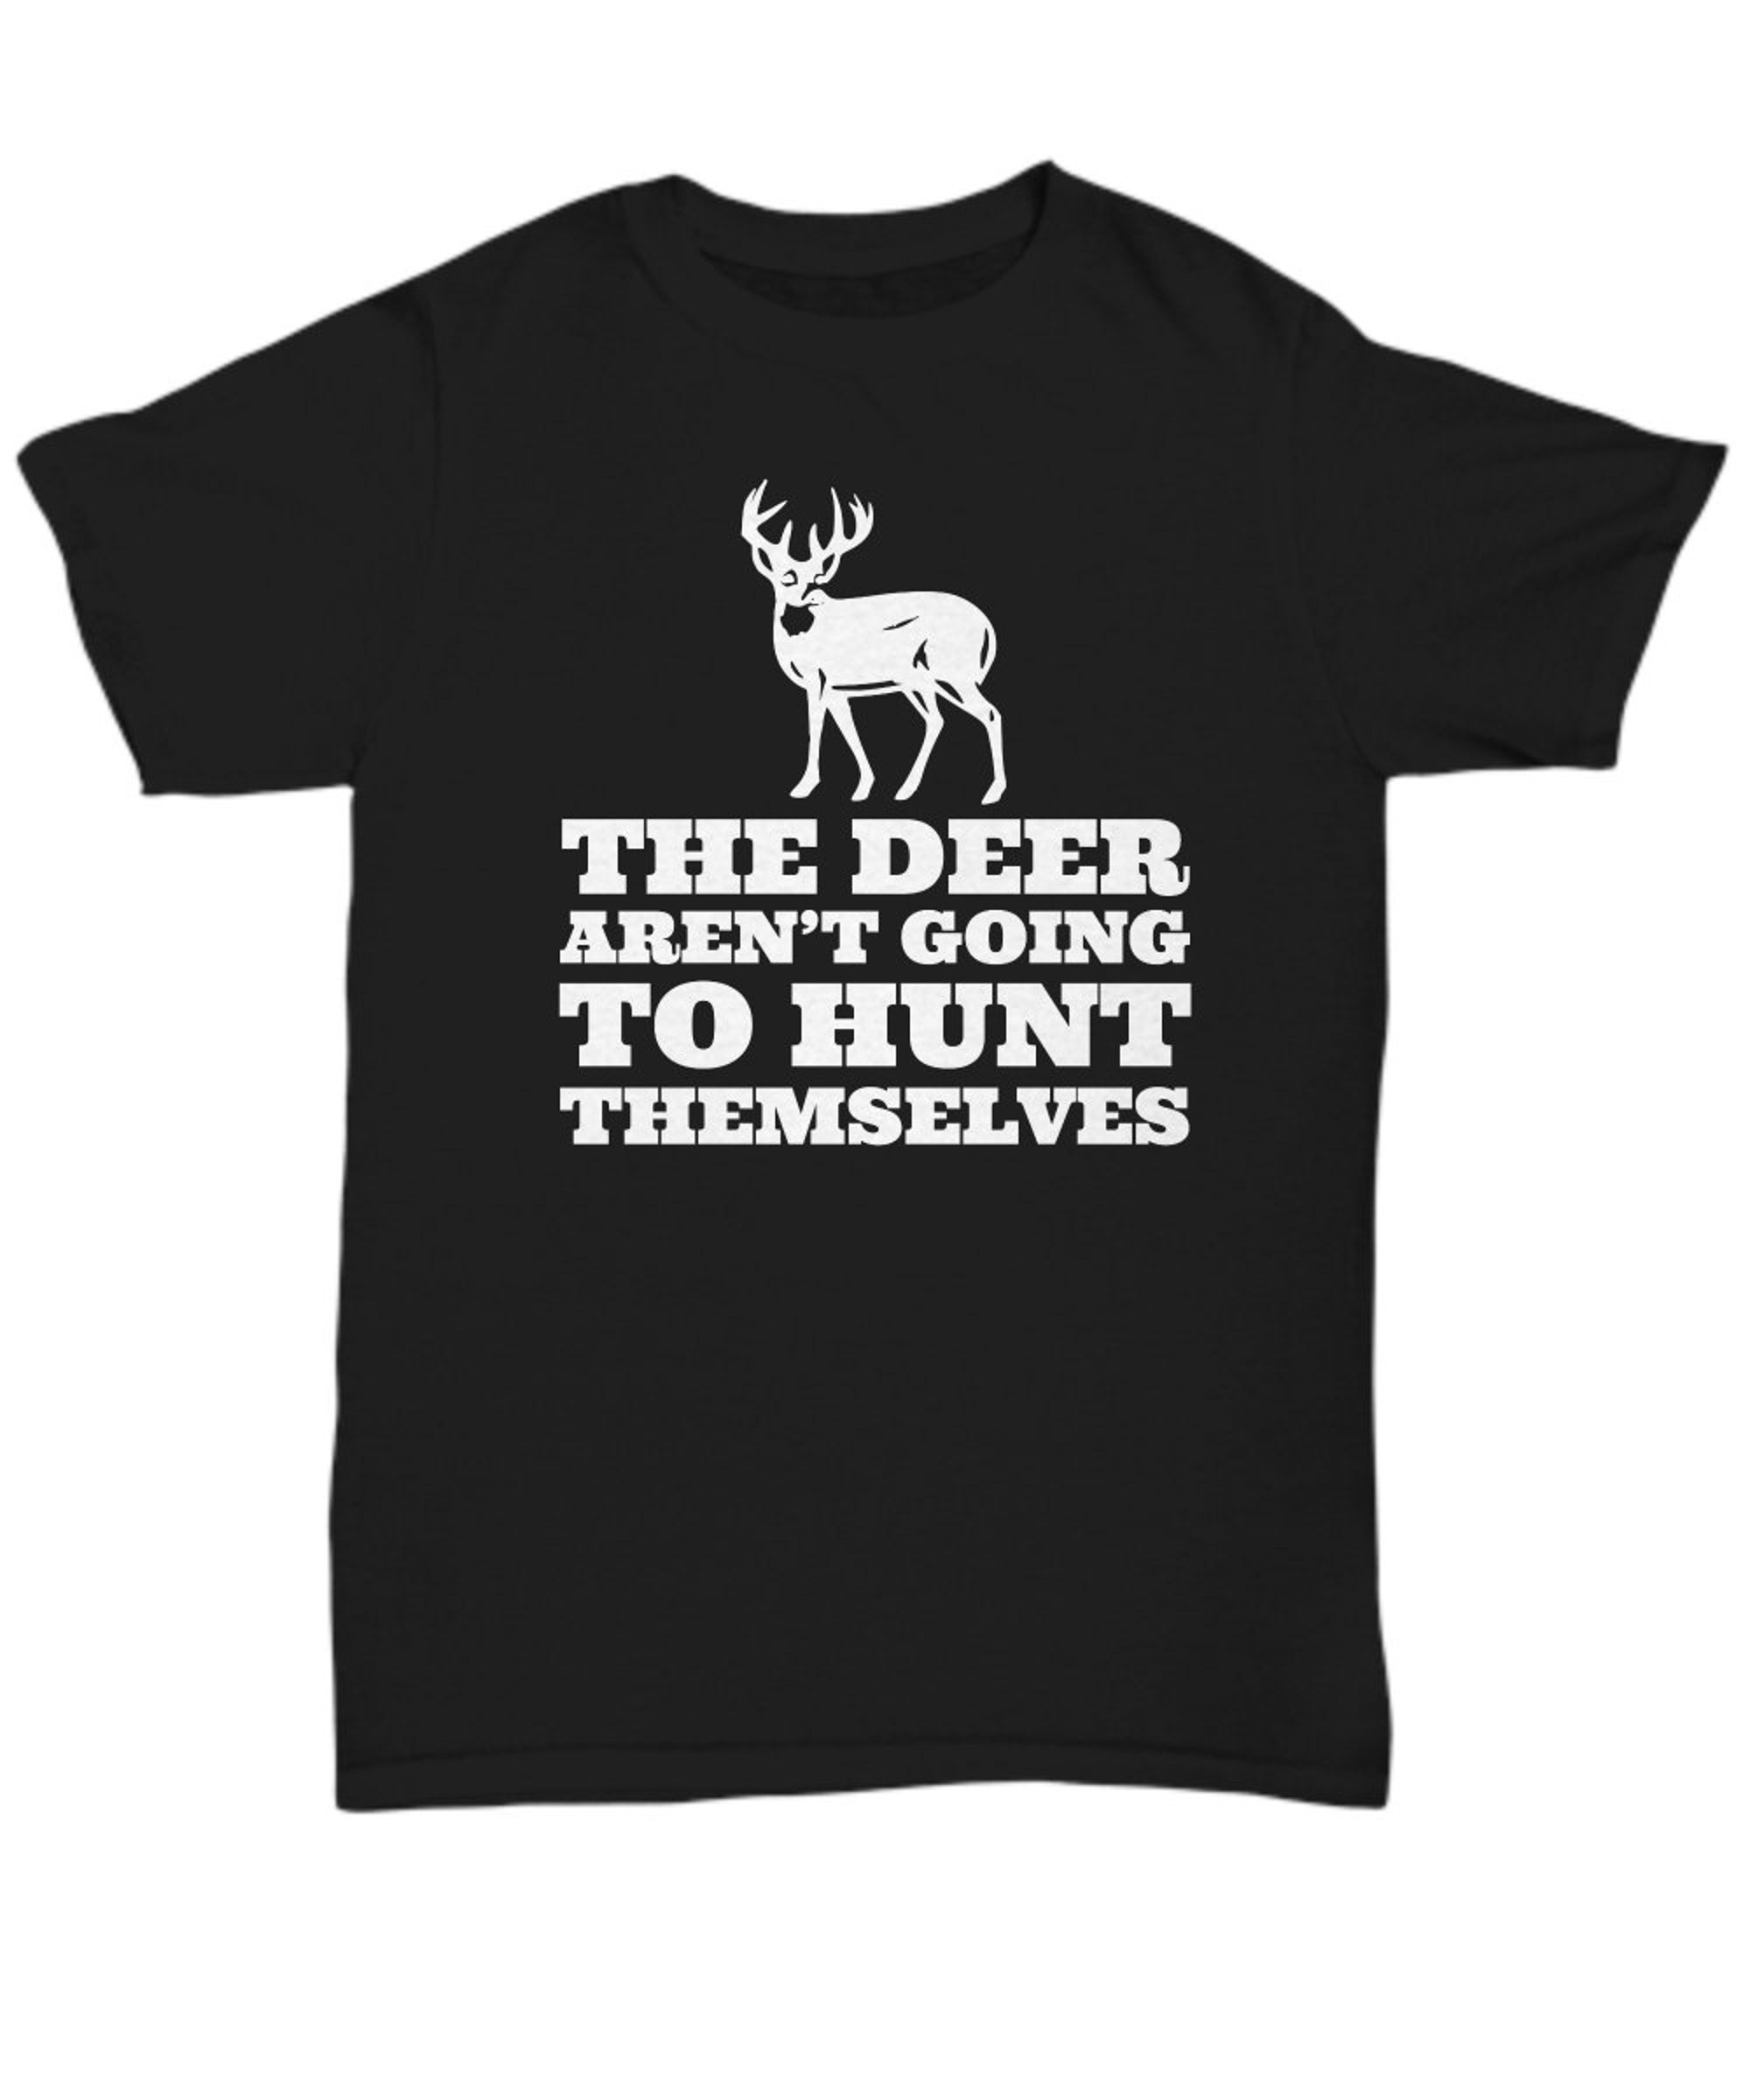 Funny Hunting Shirt - Hunter Gift Idea - Hunting T-Shirt